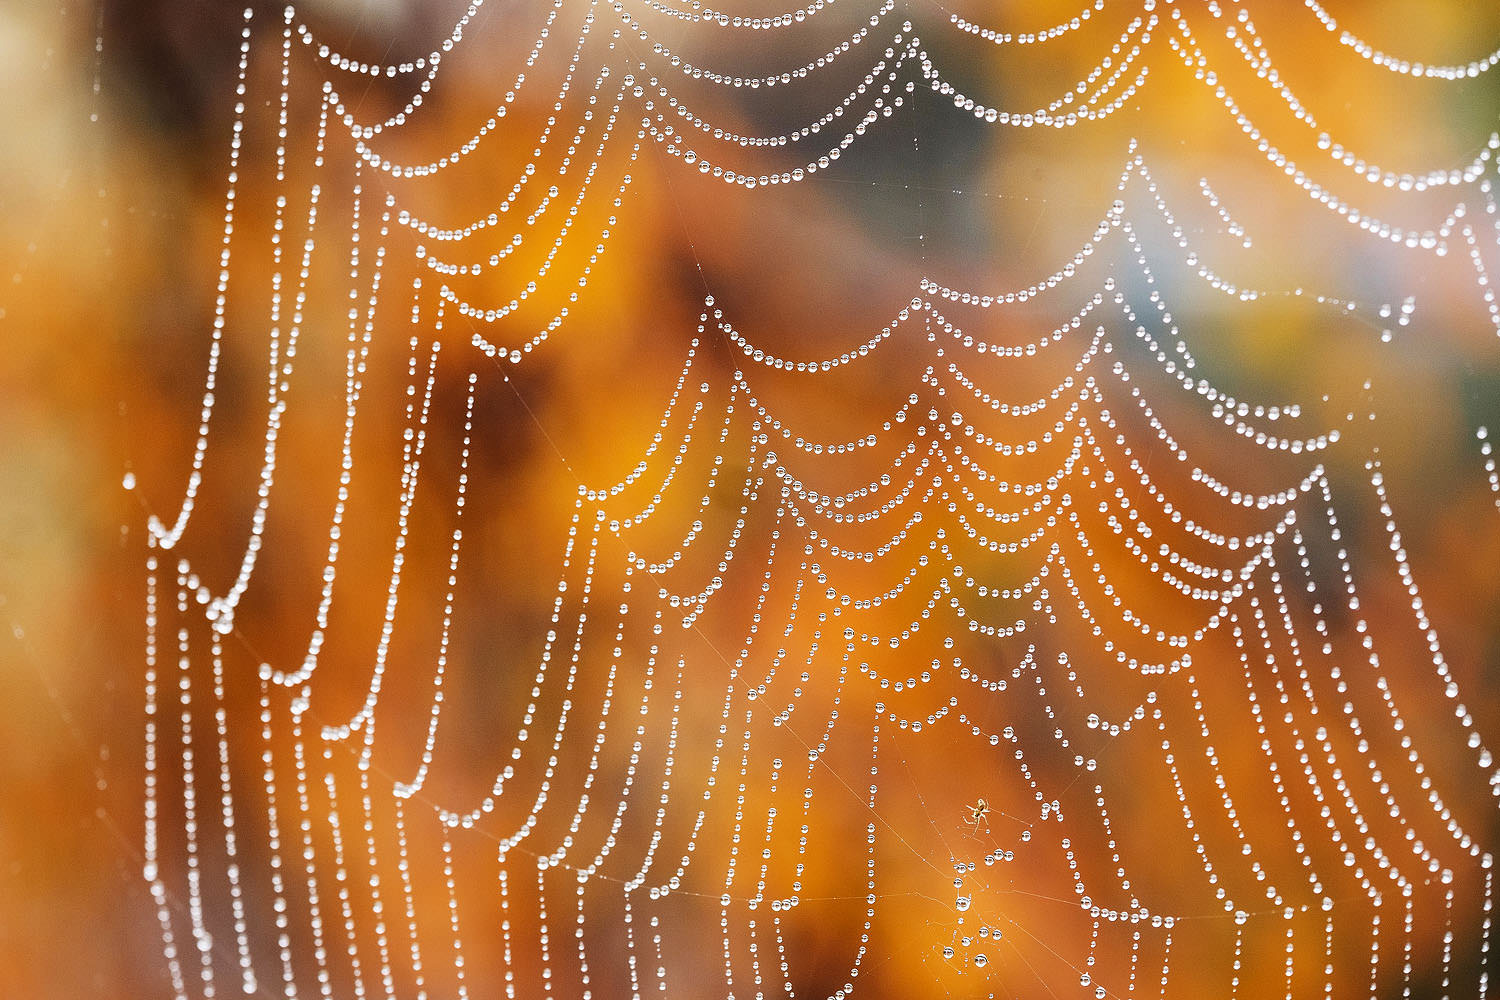 Spider web covered in rain drops